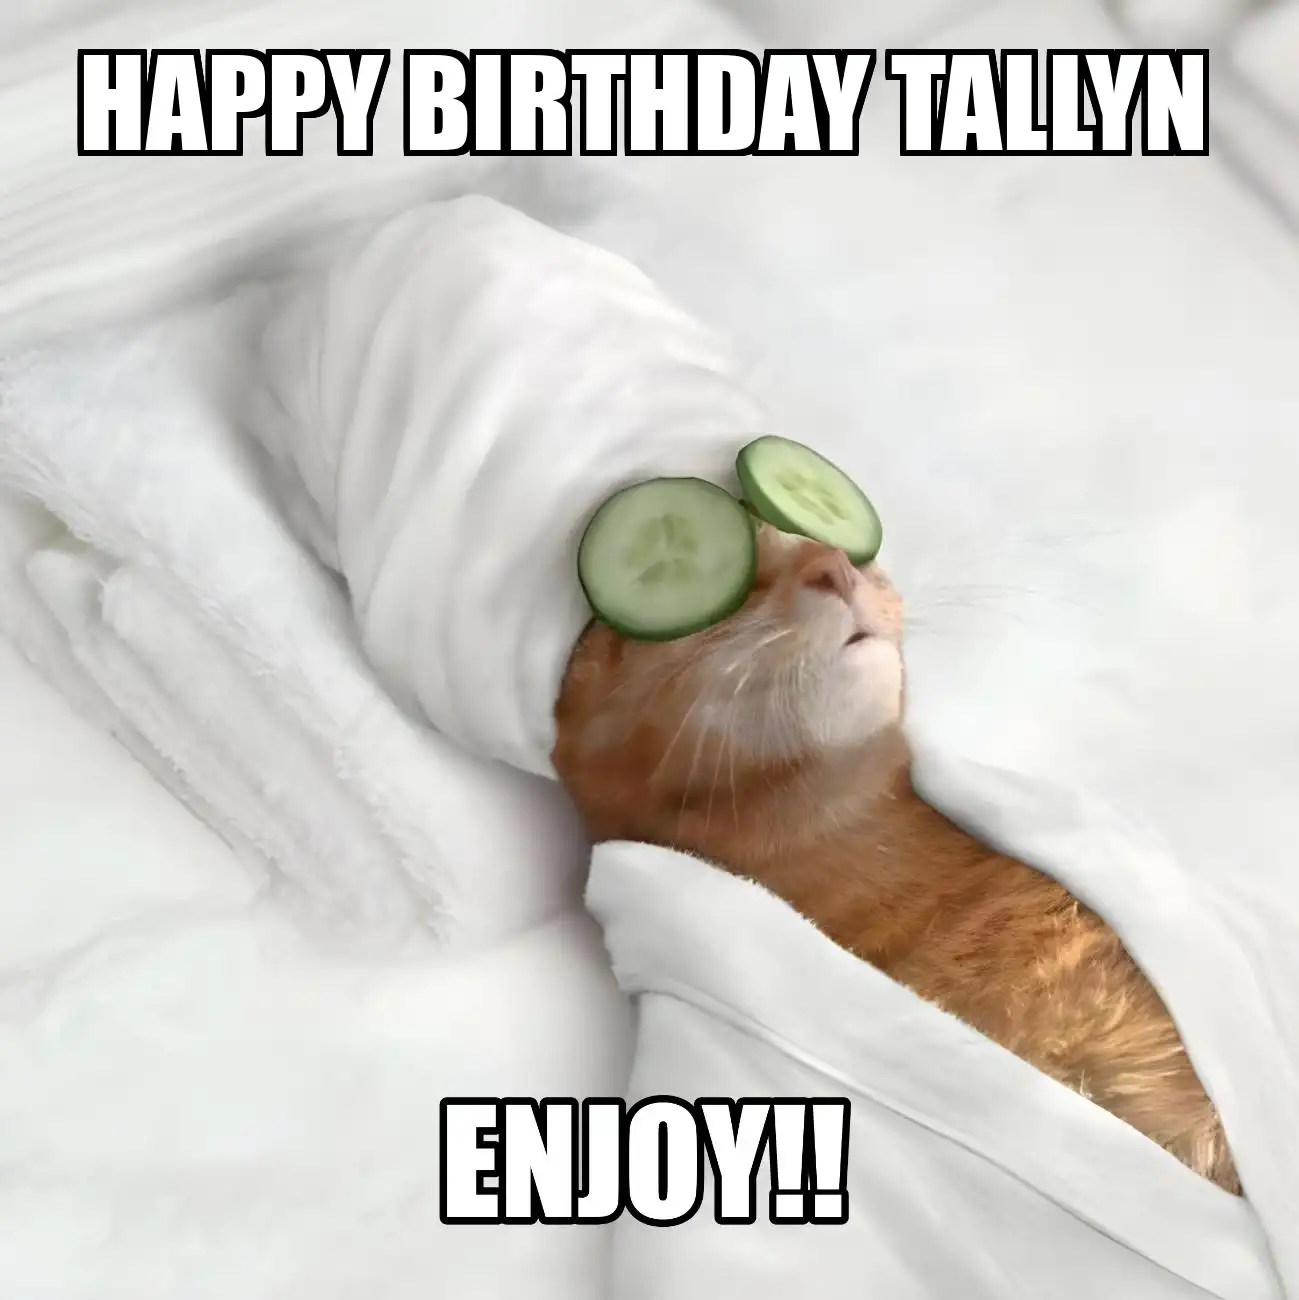 Happy Birthday Tallyn Enjoy Cat Meme